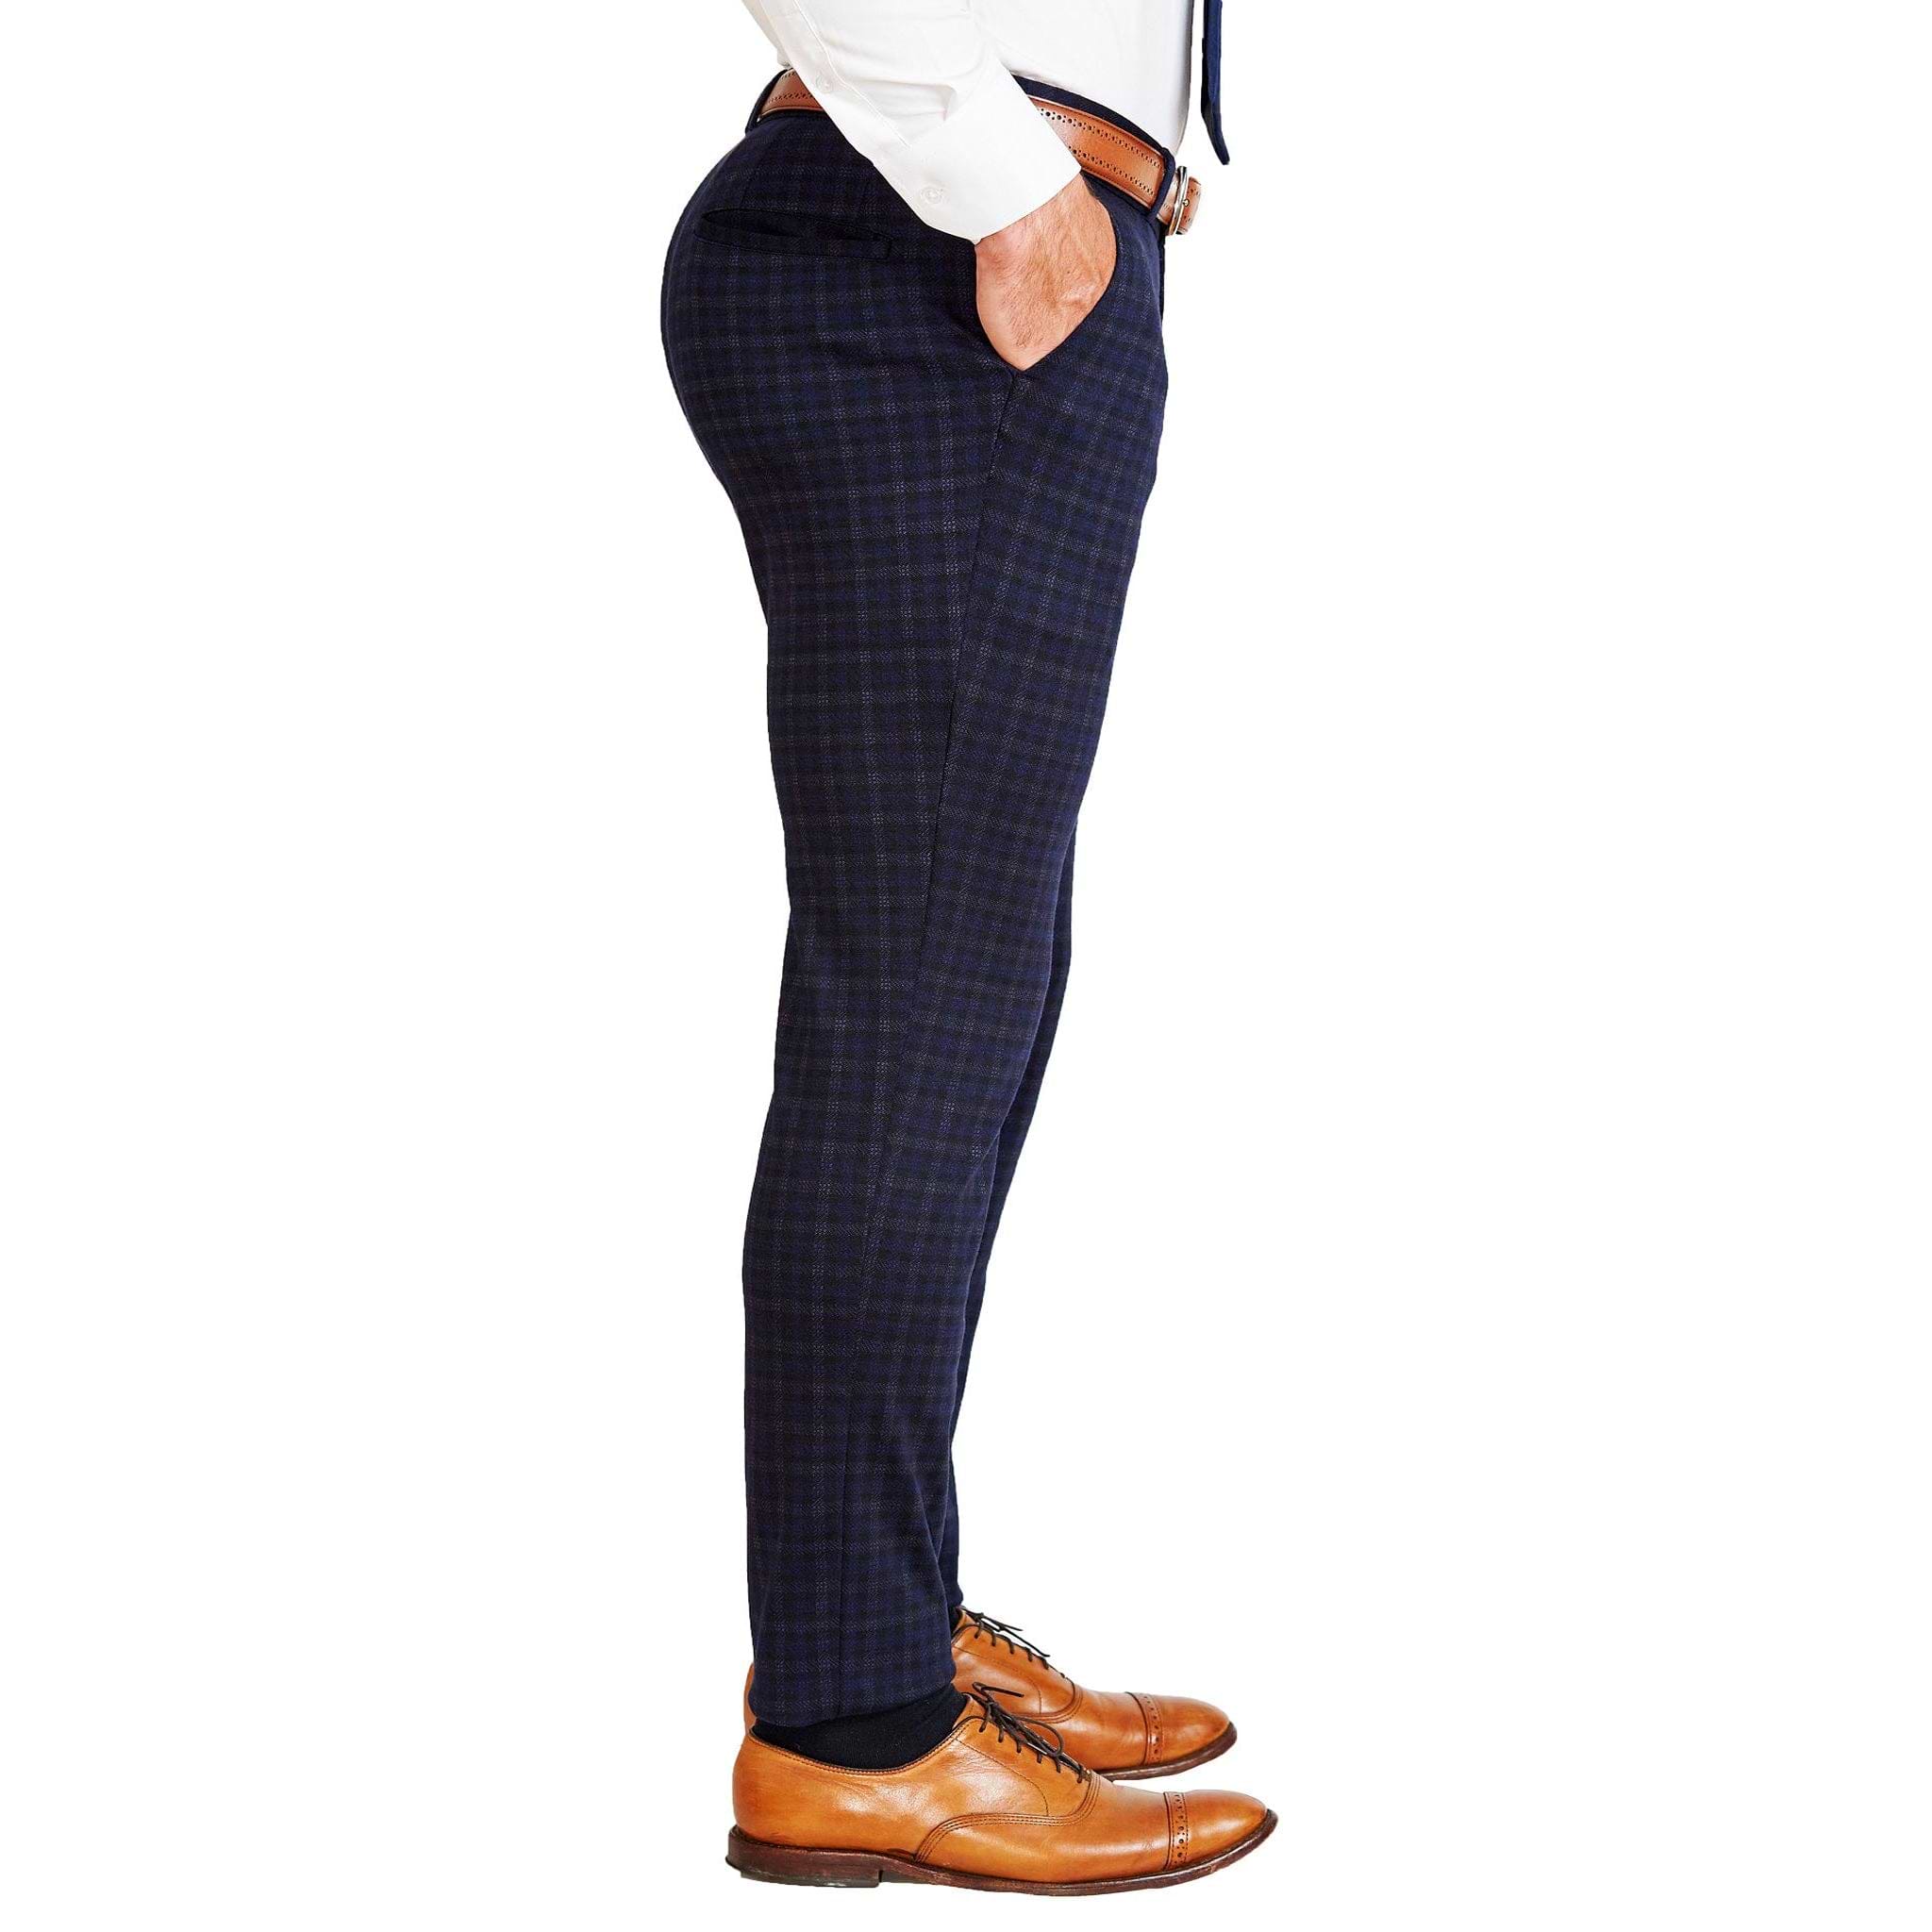 Hollister super skinny trouser in blue plaid | ASOS